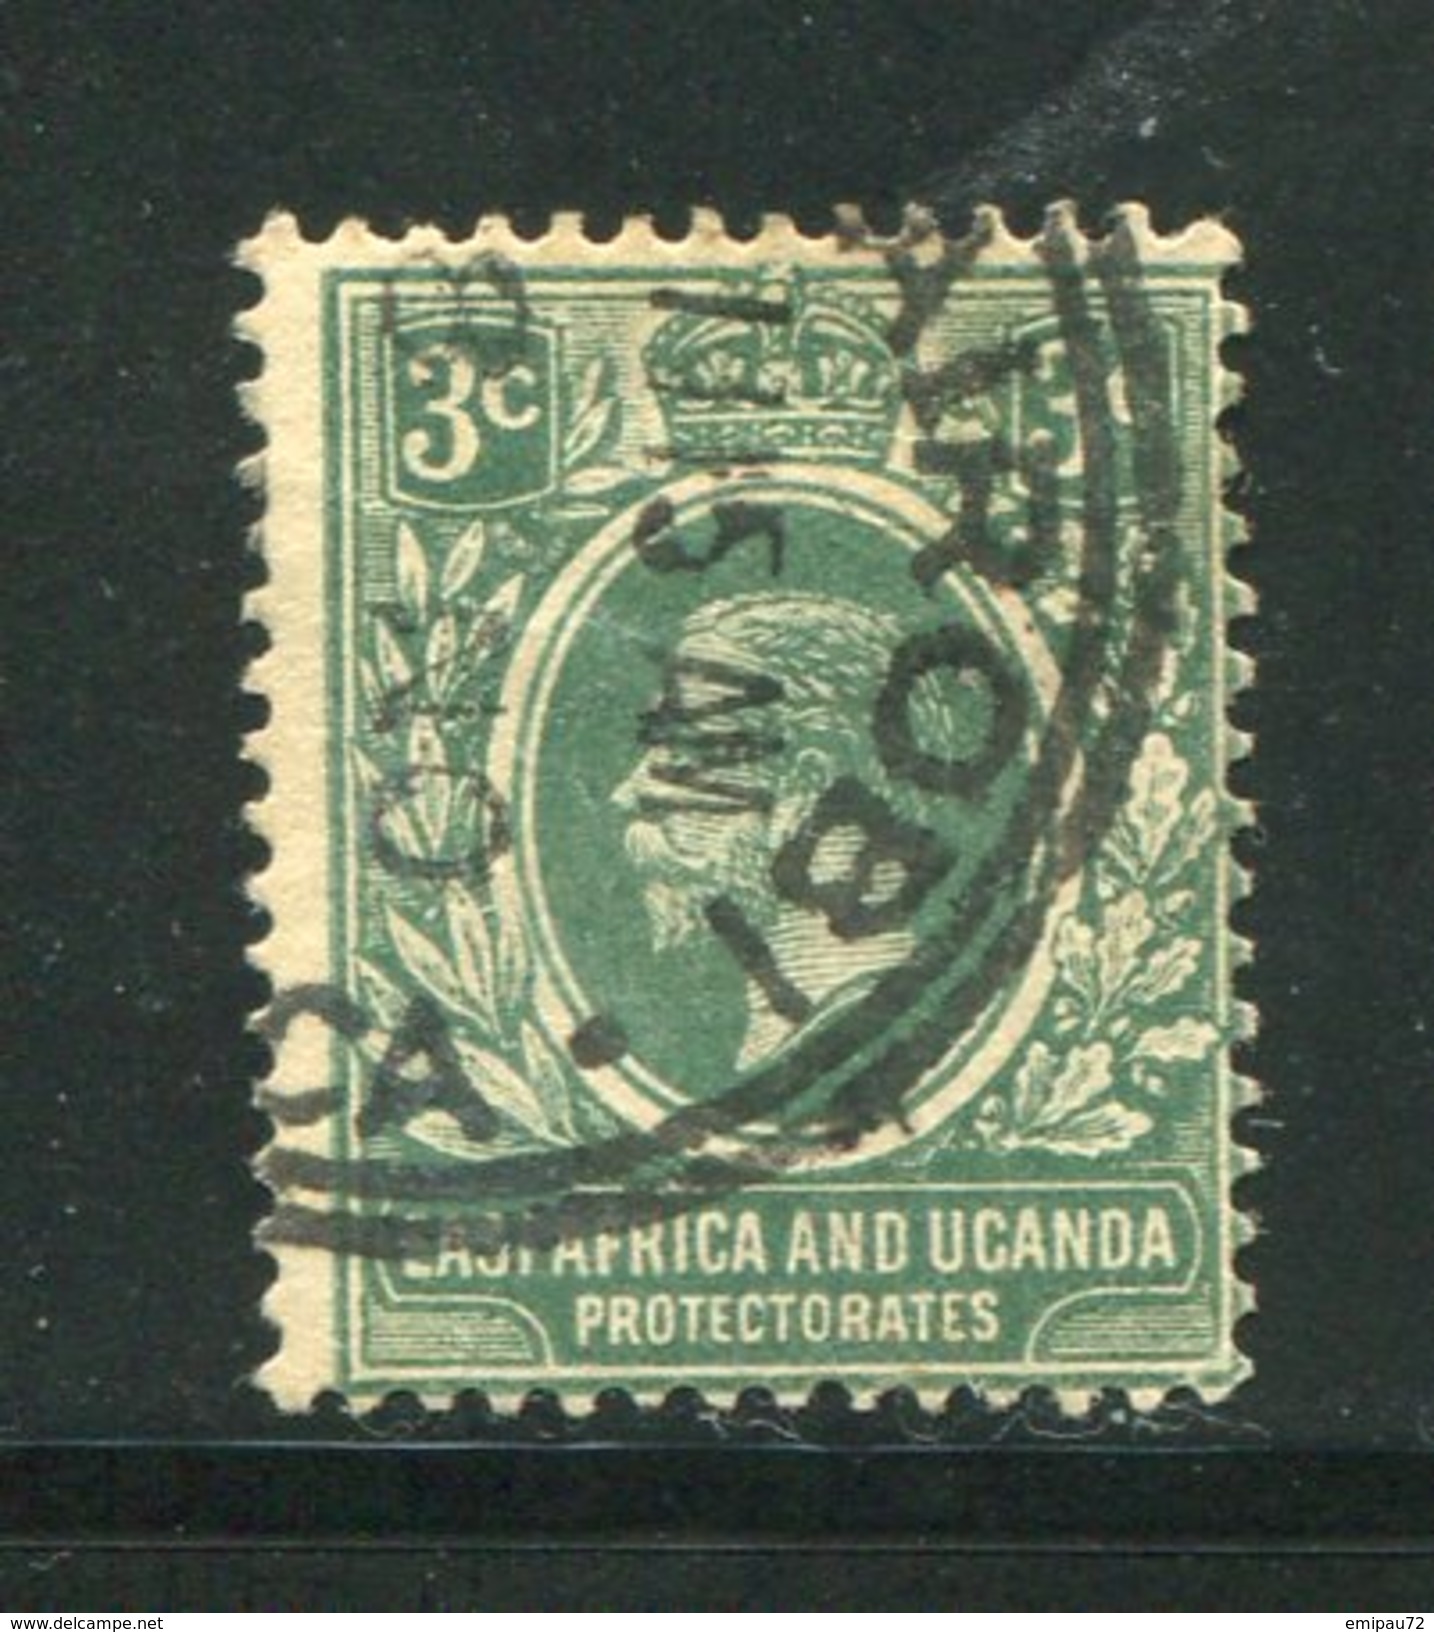 AFRIQUE ORIENTALE BRITANNIQUE Et OUGANDA- Y&T N°134- Oblitéré - East Africa & Uganda Protectorates